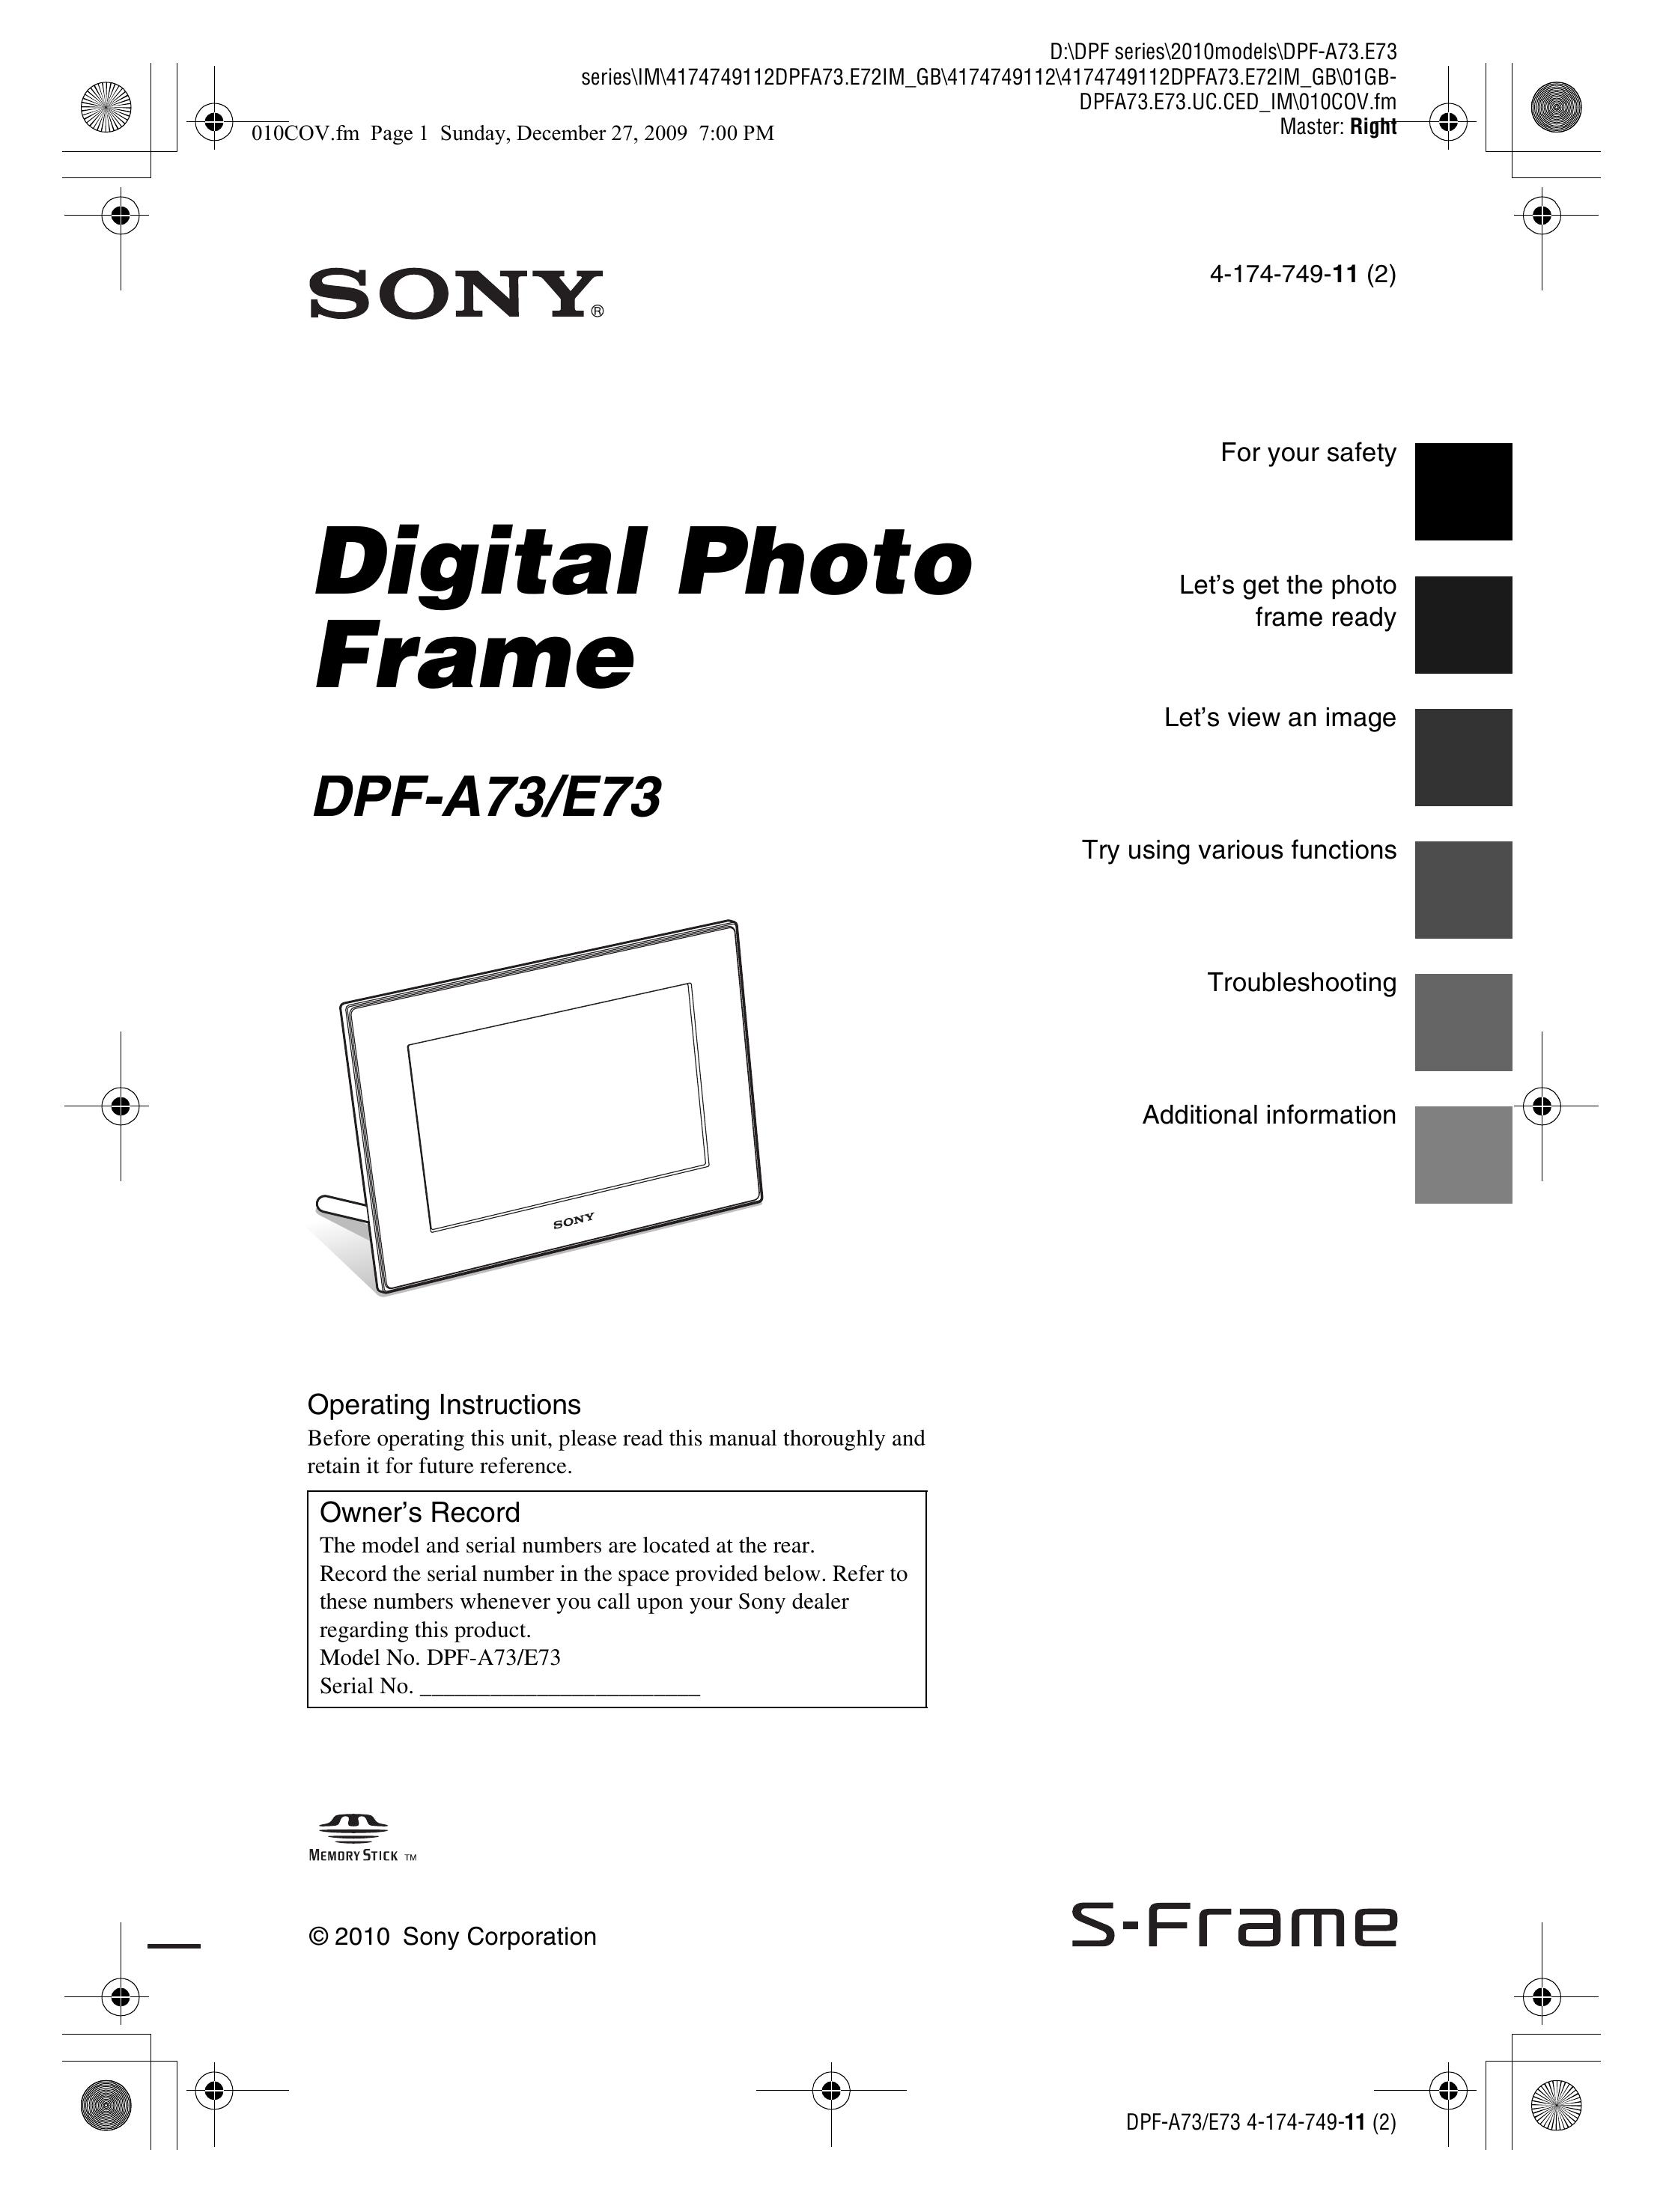 Sony DPF-A73/E73 Digital Photo Frame User Manual